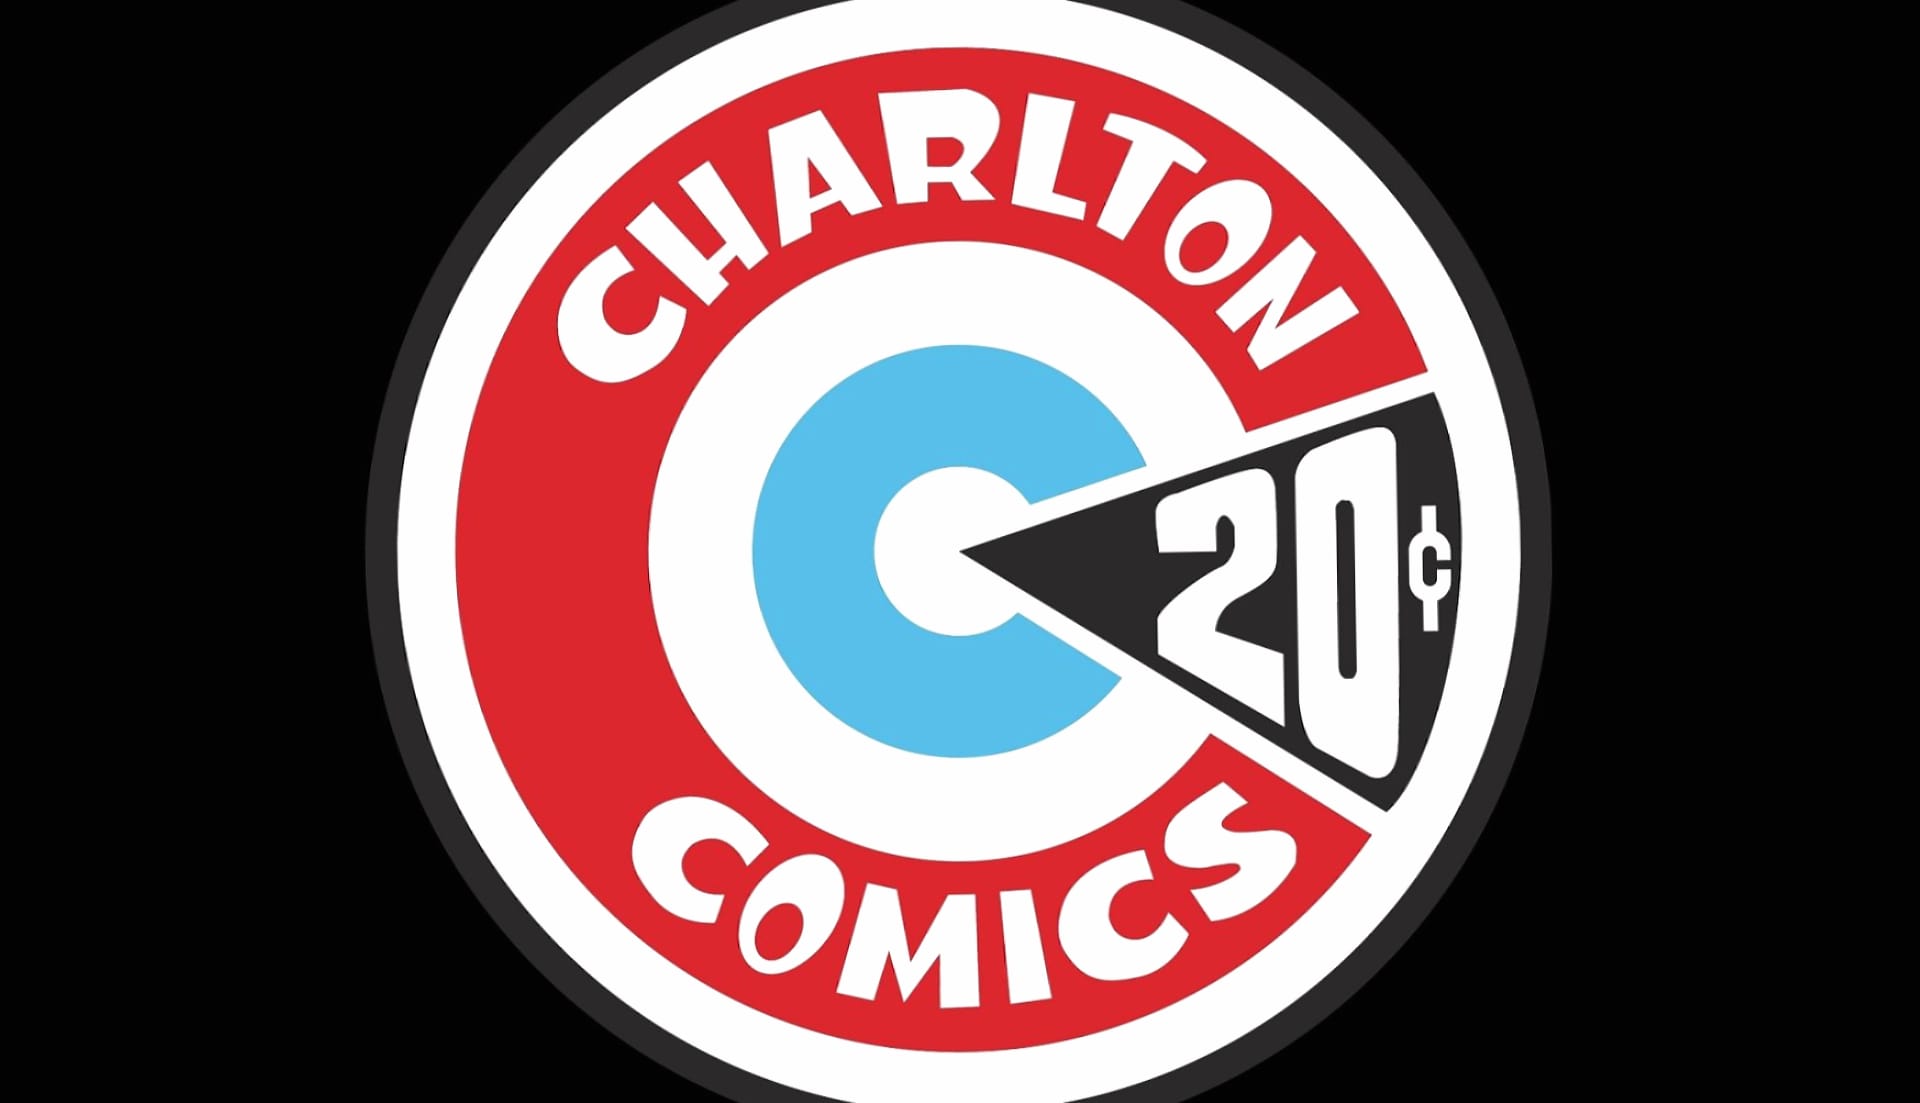 charlton Comics at 1600 x 1200 size wallpapers HD quality